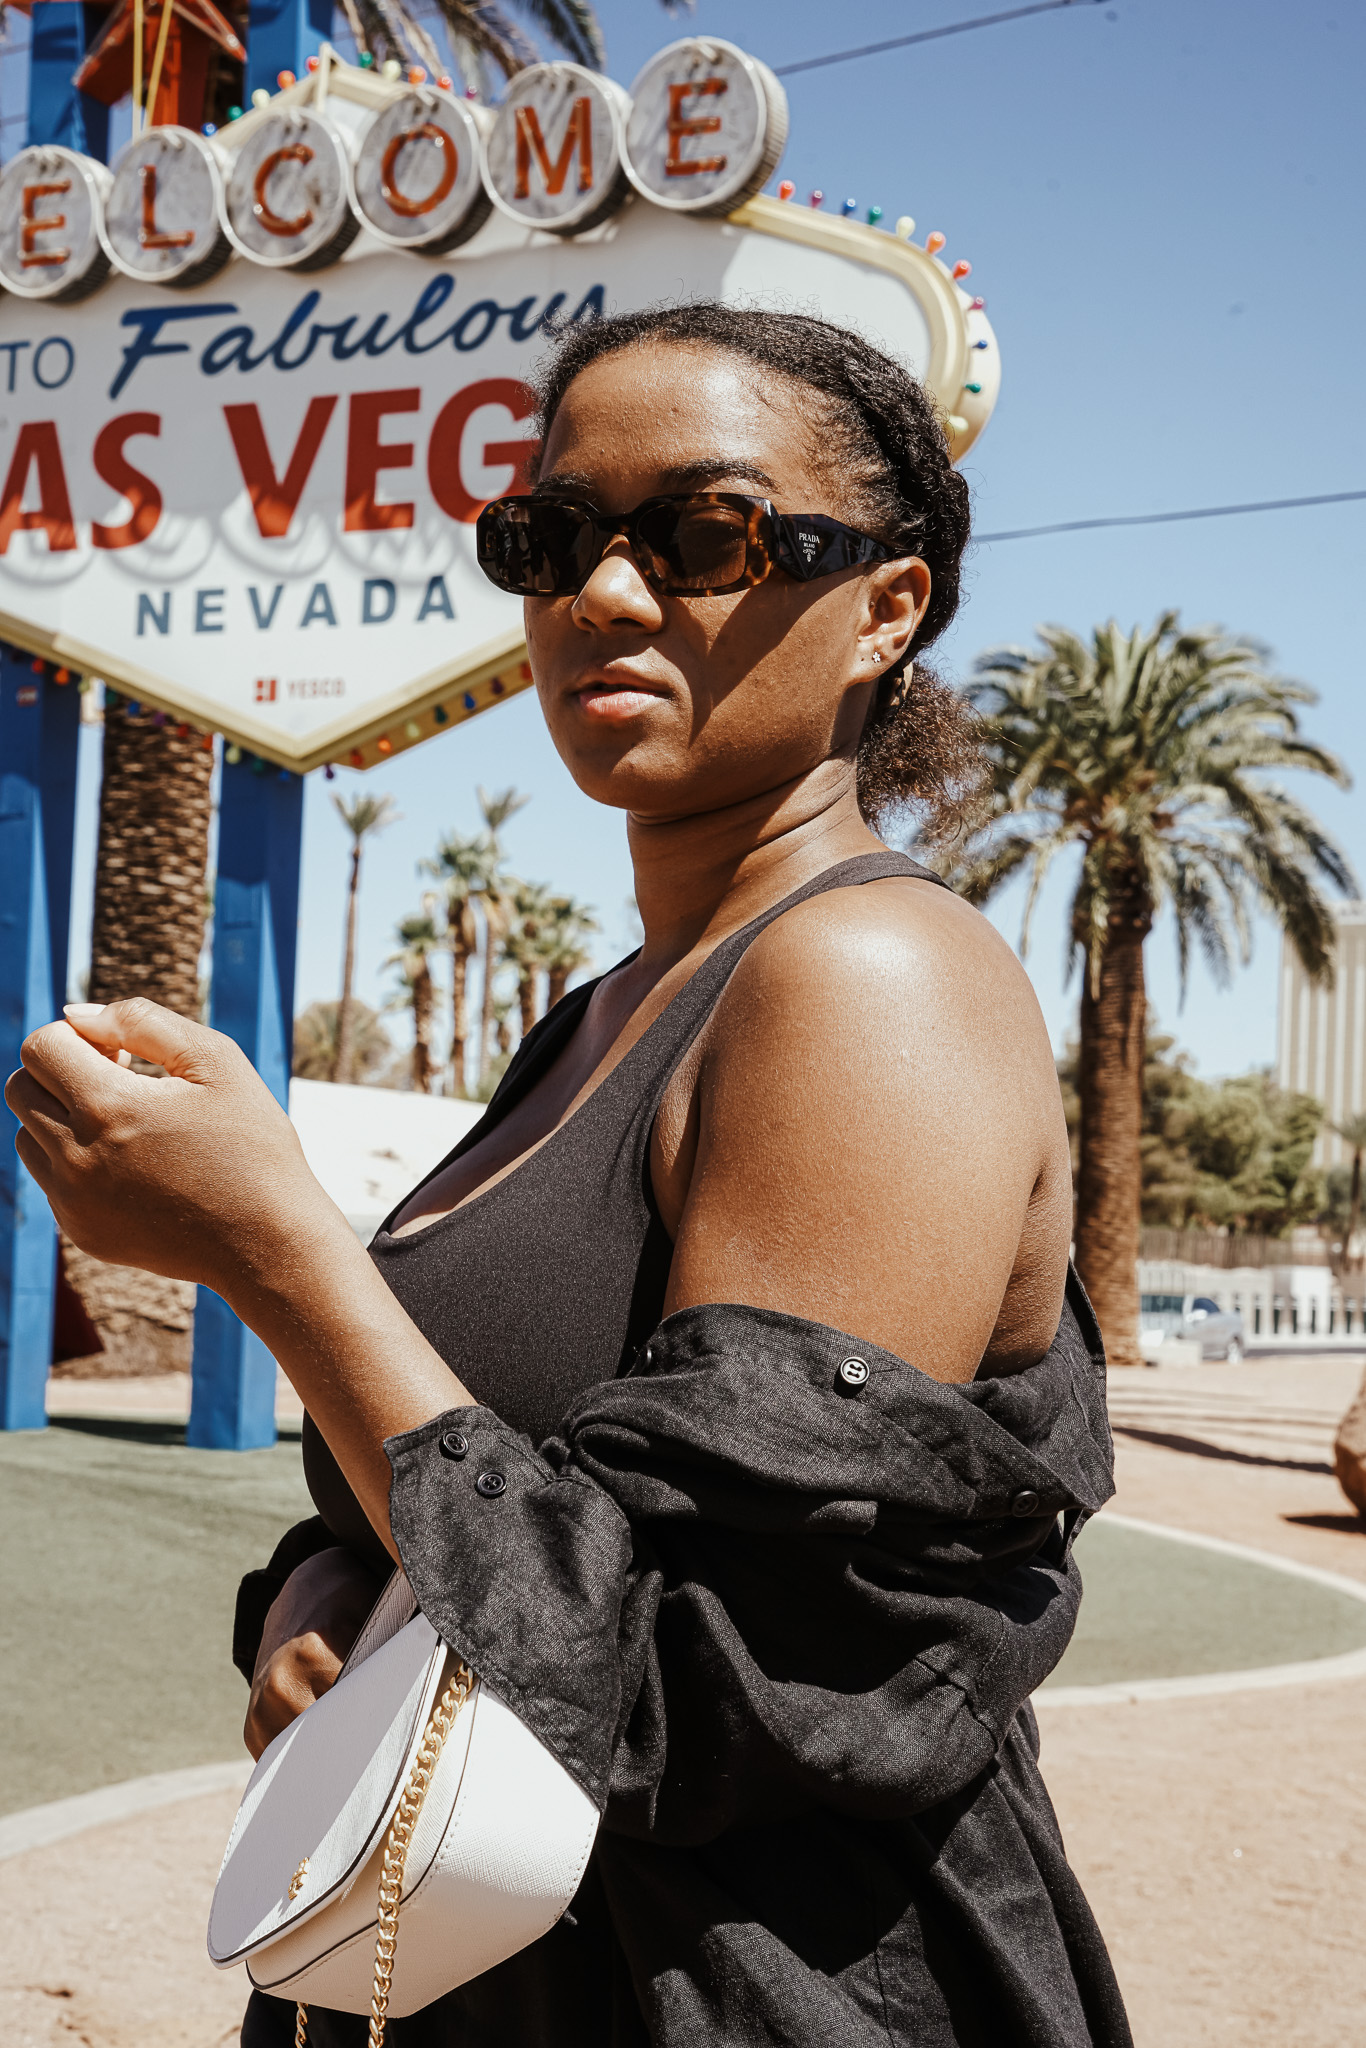 Top 10 things to do in Las Vegas, Las Vegas sign blogger photo